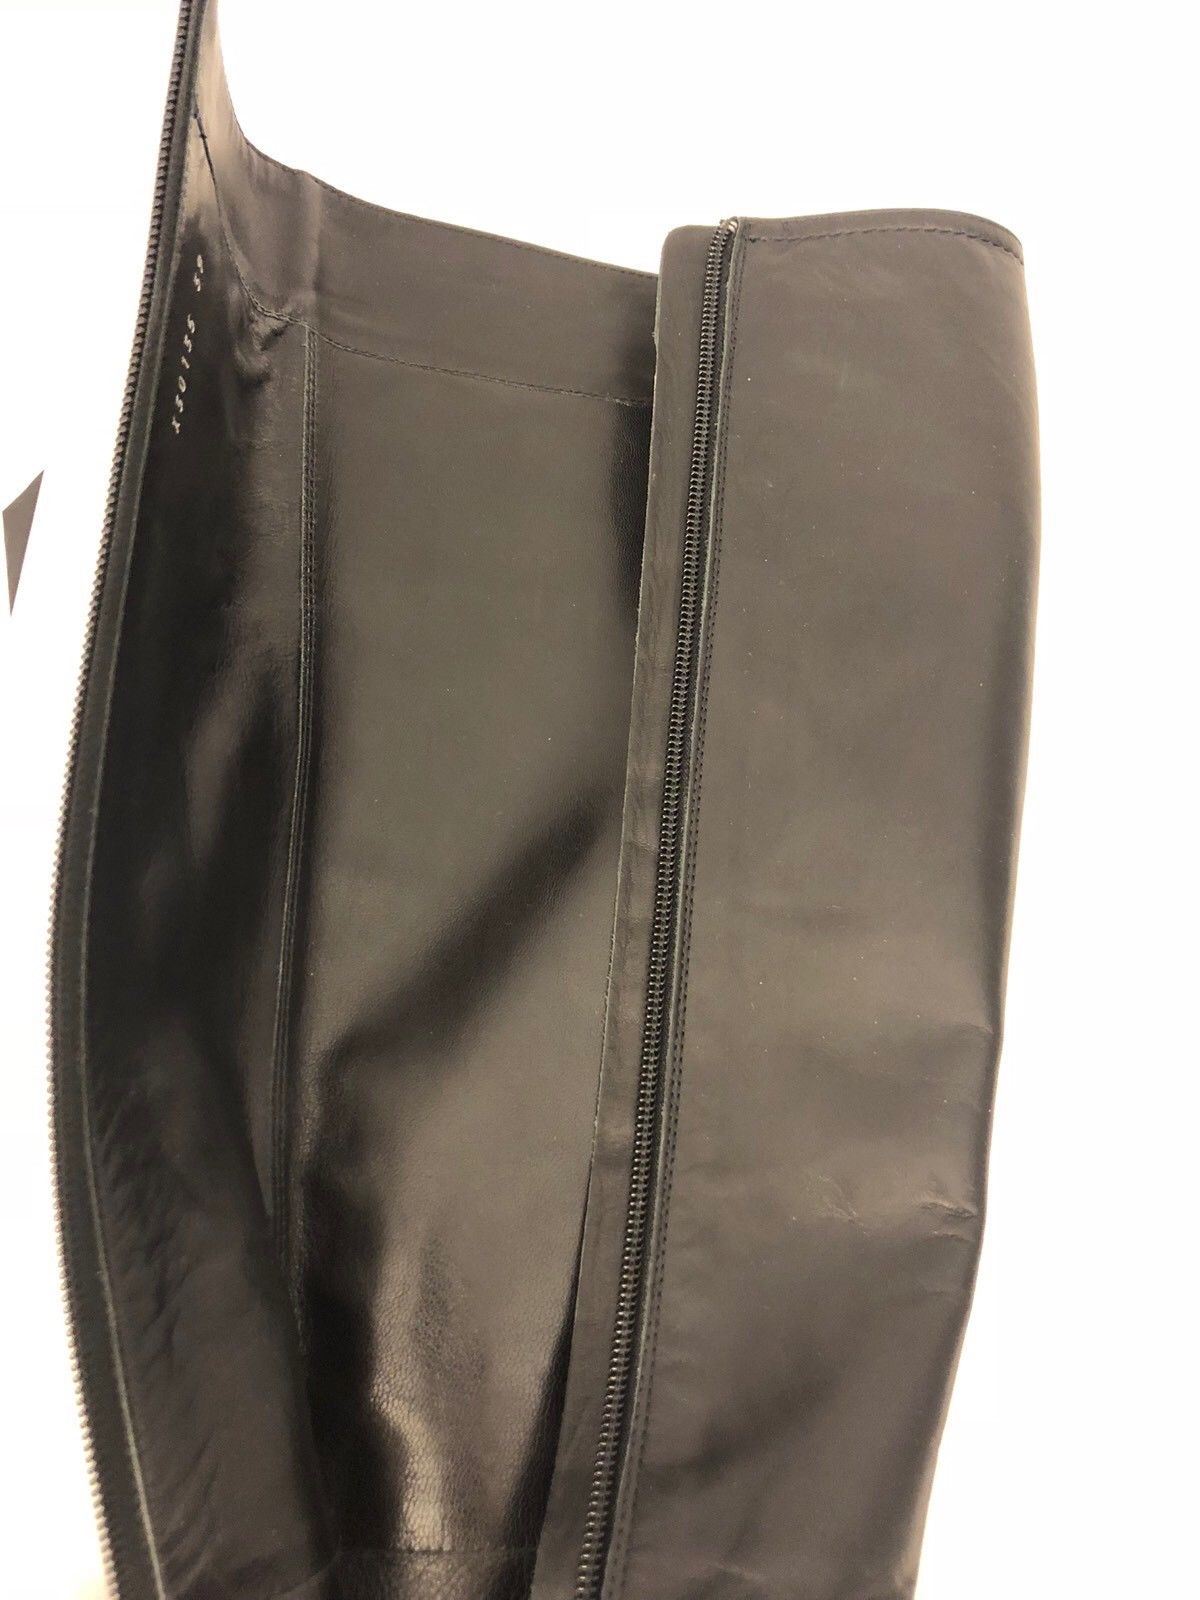 NIB $925 Emporio Armani Women's Black Leather Knee High Boots 37 Eu IT X30135 - BAYSUPERSTORE